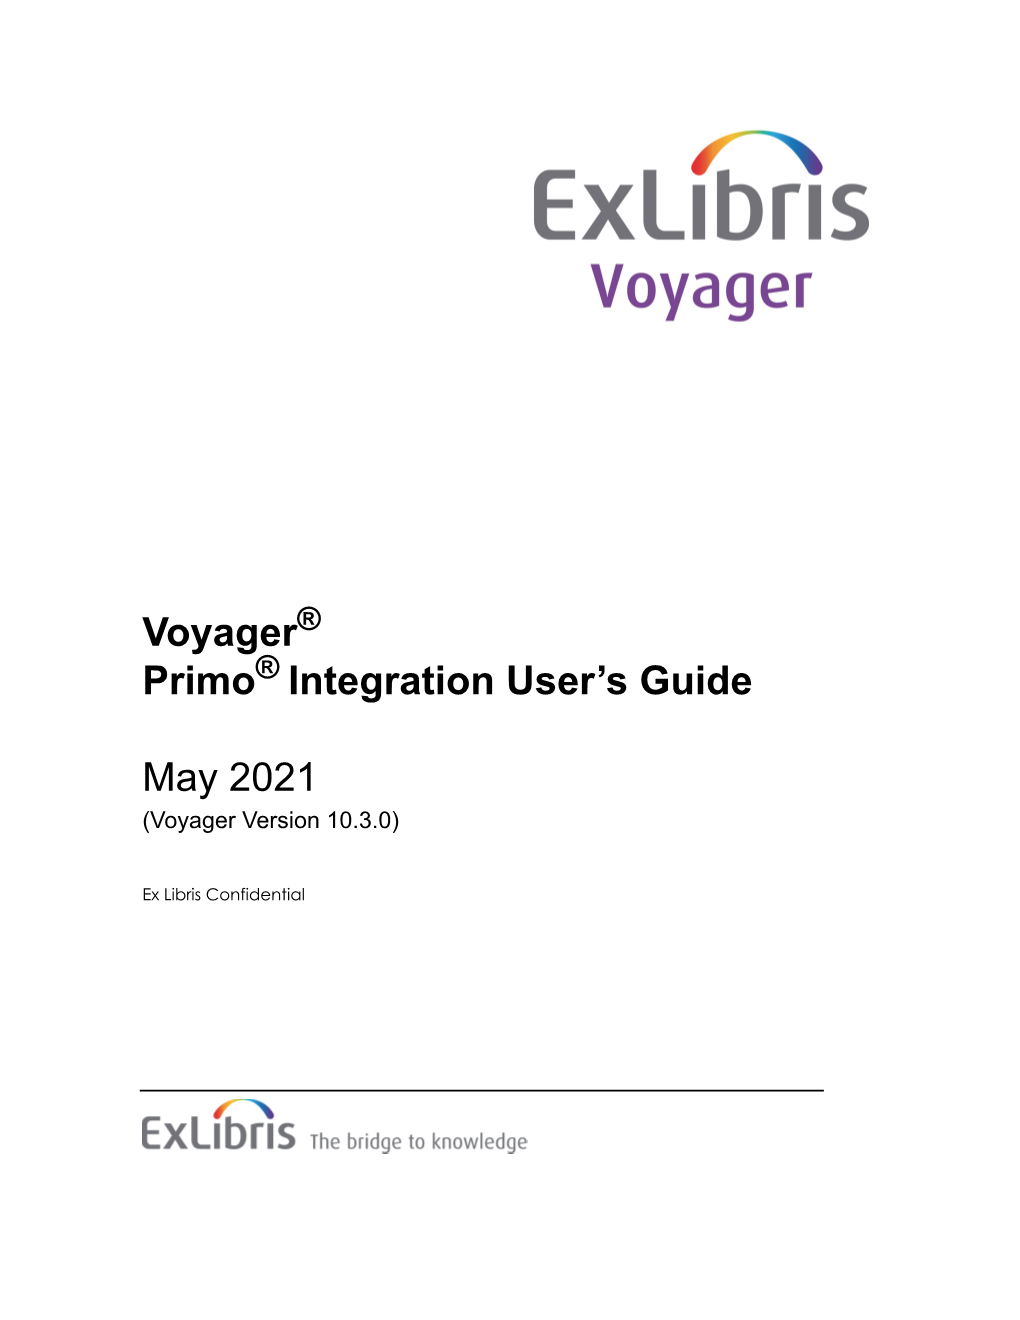 Voyager Primo Integration